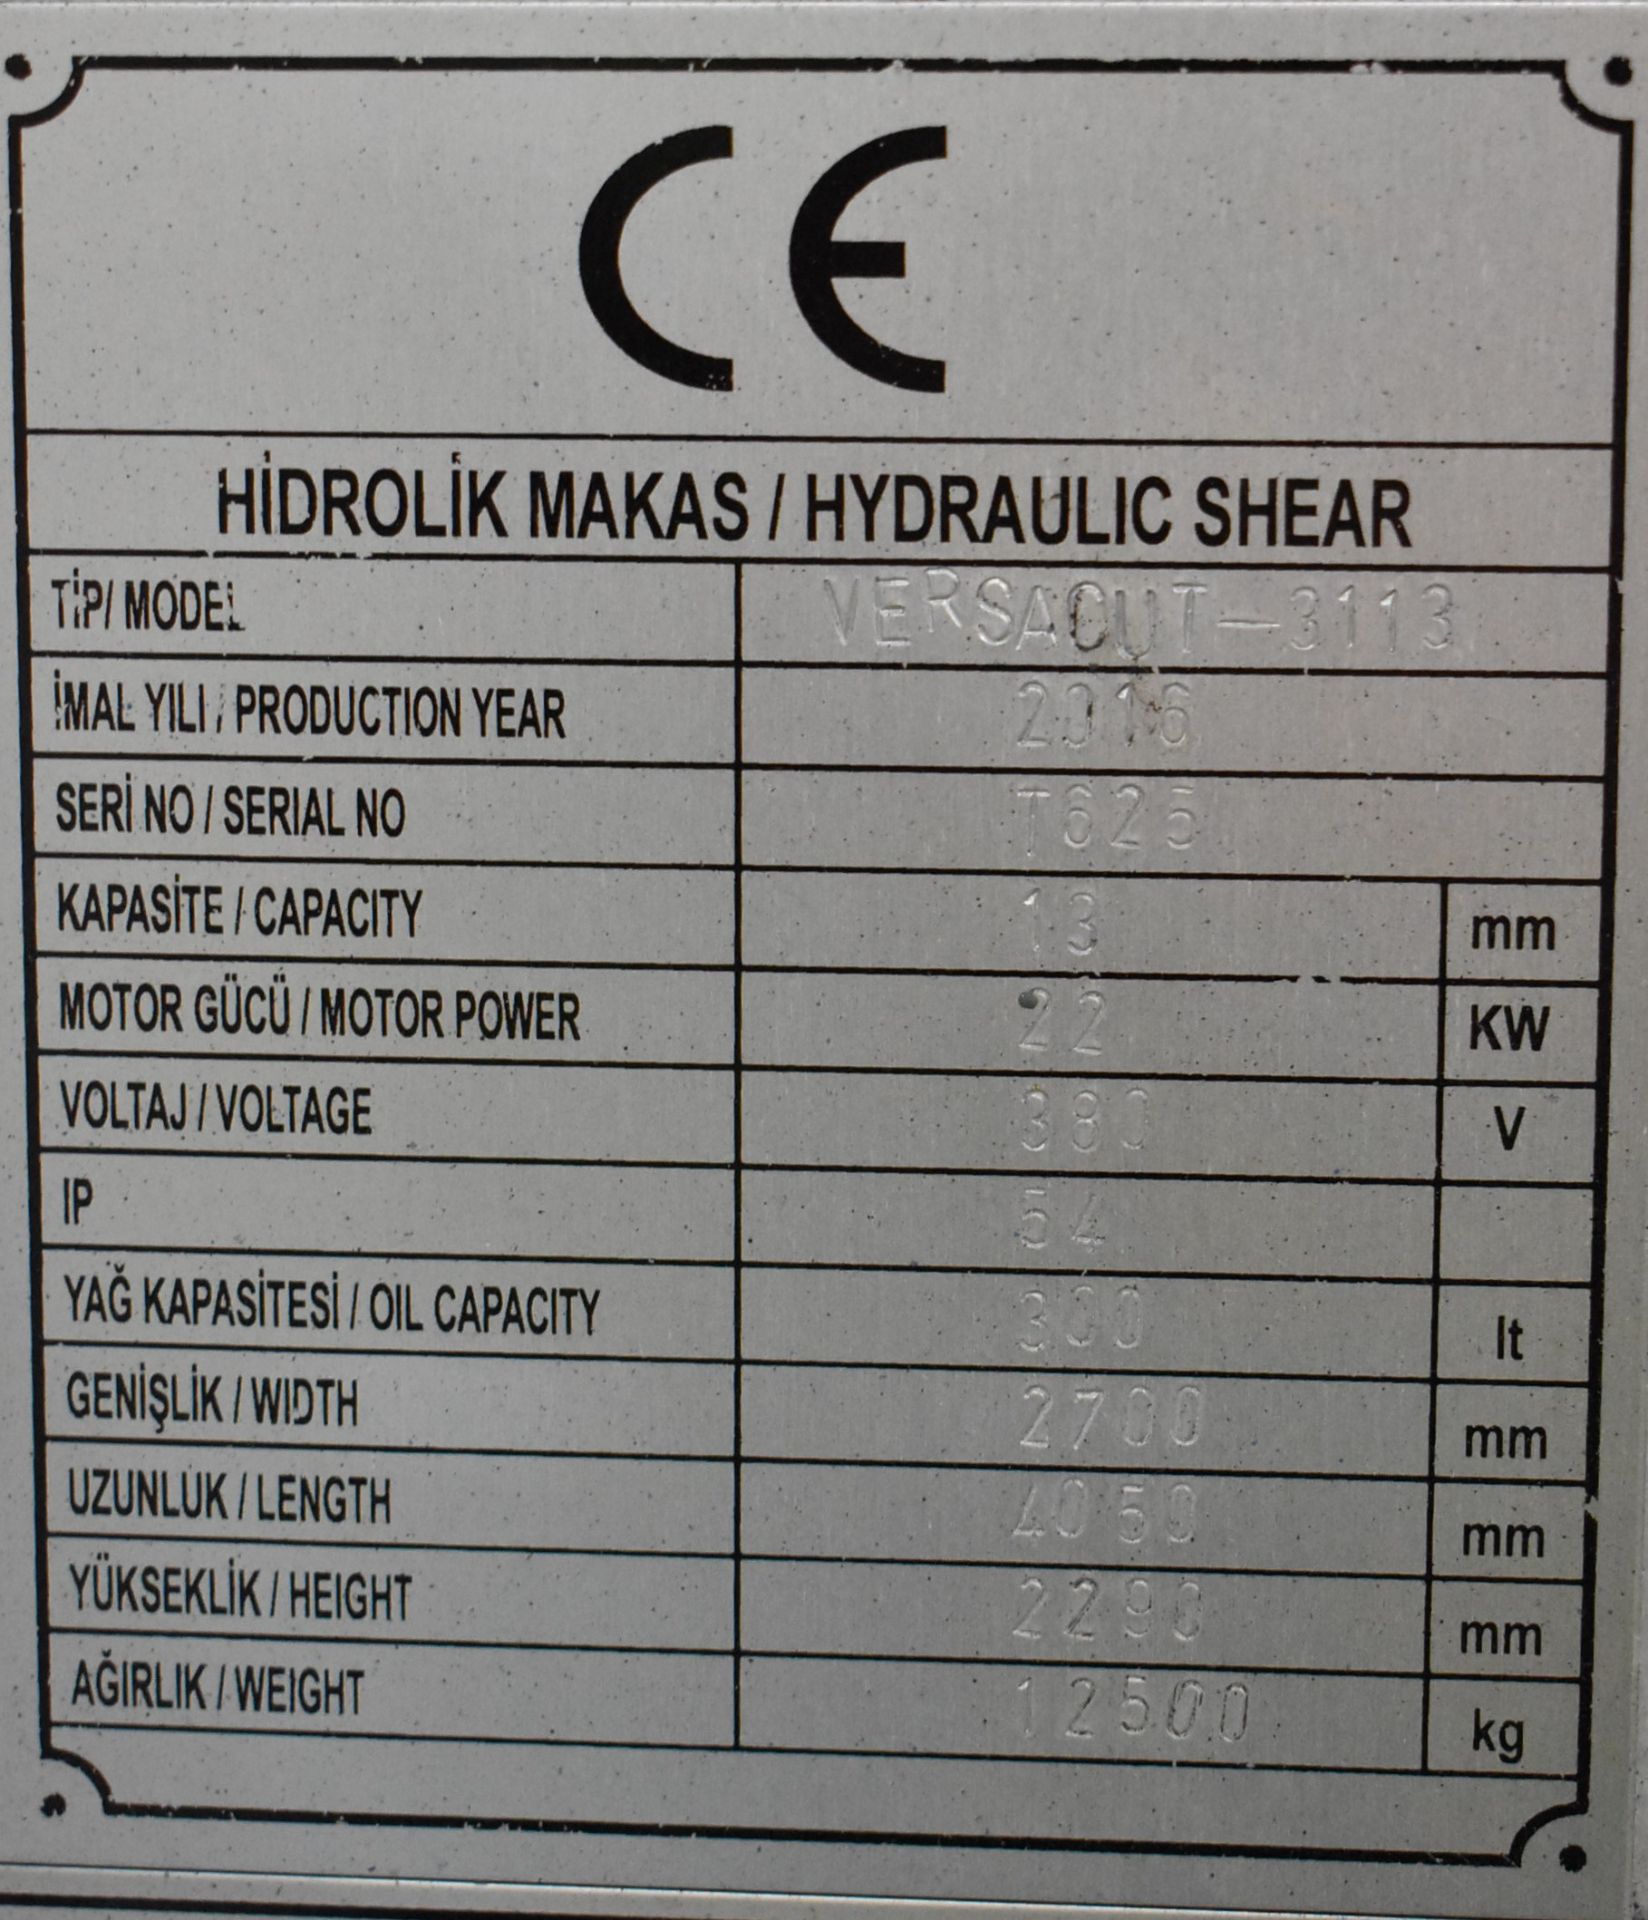 TOSKAR BURSA (2016) VERSACUT-3113 10' HYDRAULIC VARIABLE RAKE SHEAR WITH CYBELEC CNC CONTROL, 122" - Image 9 of 15